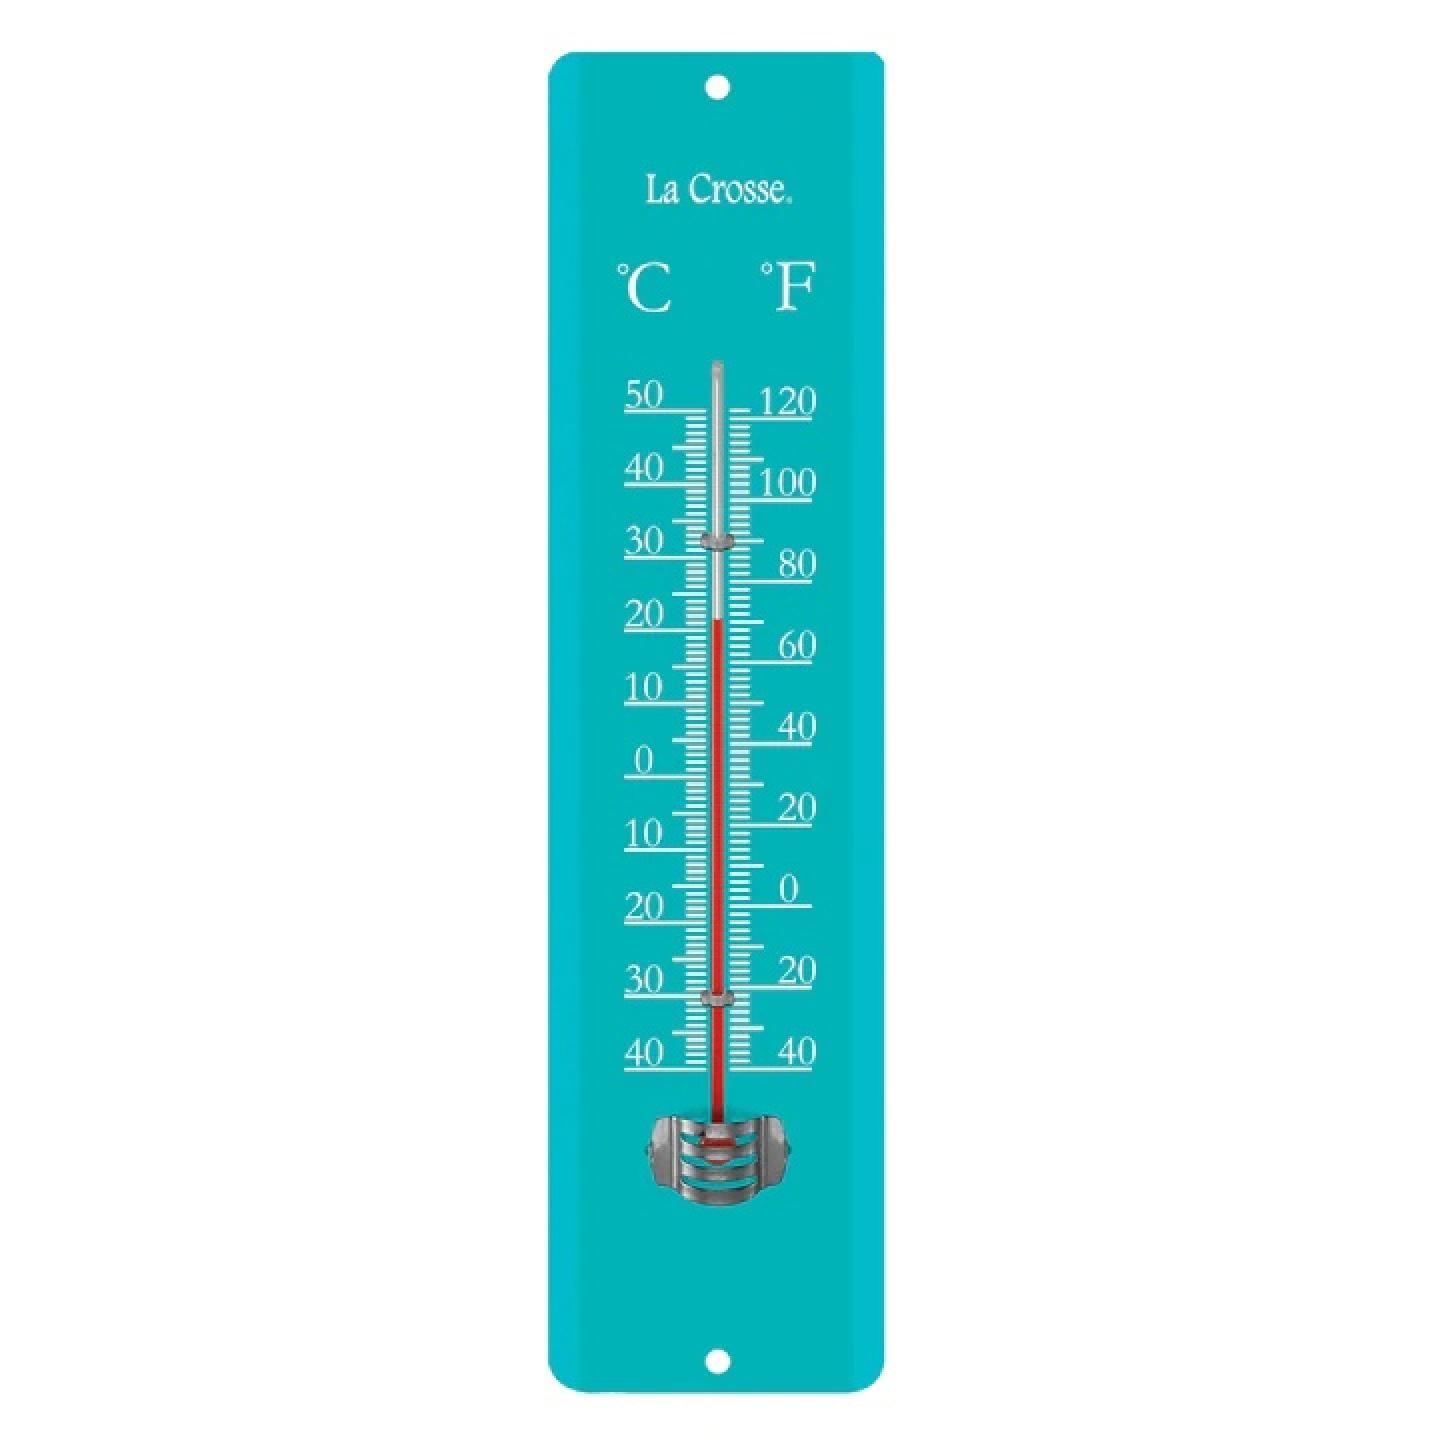 La Crosse Metal Thermometer